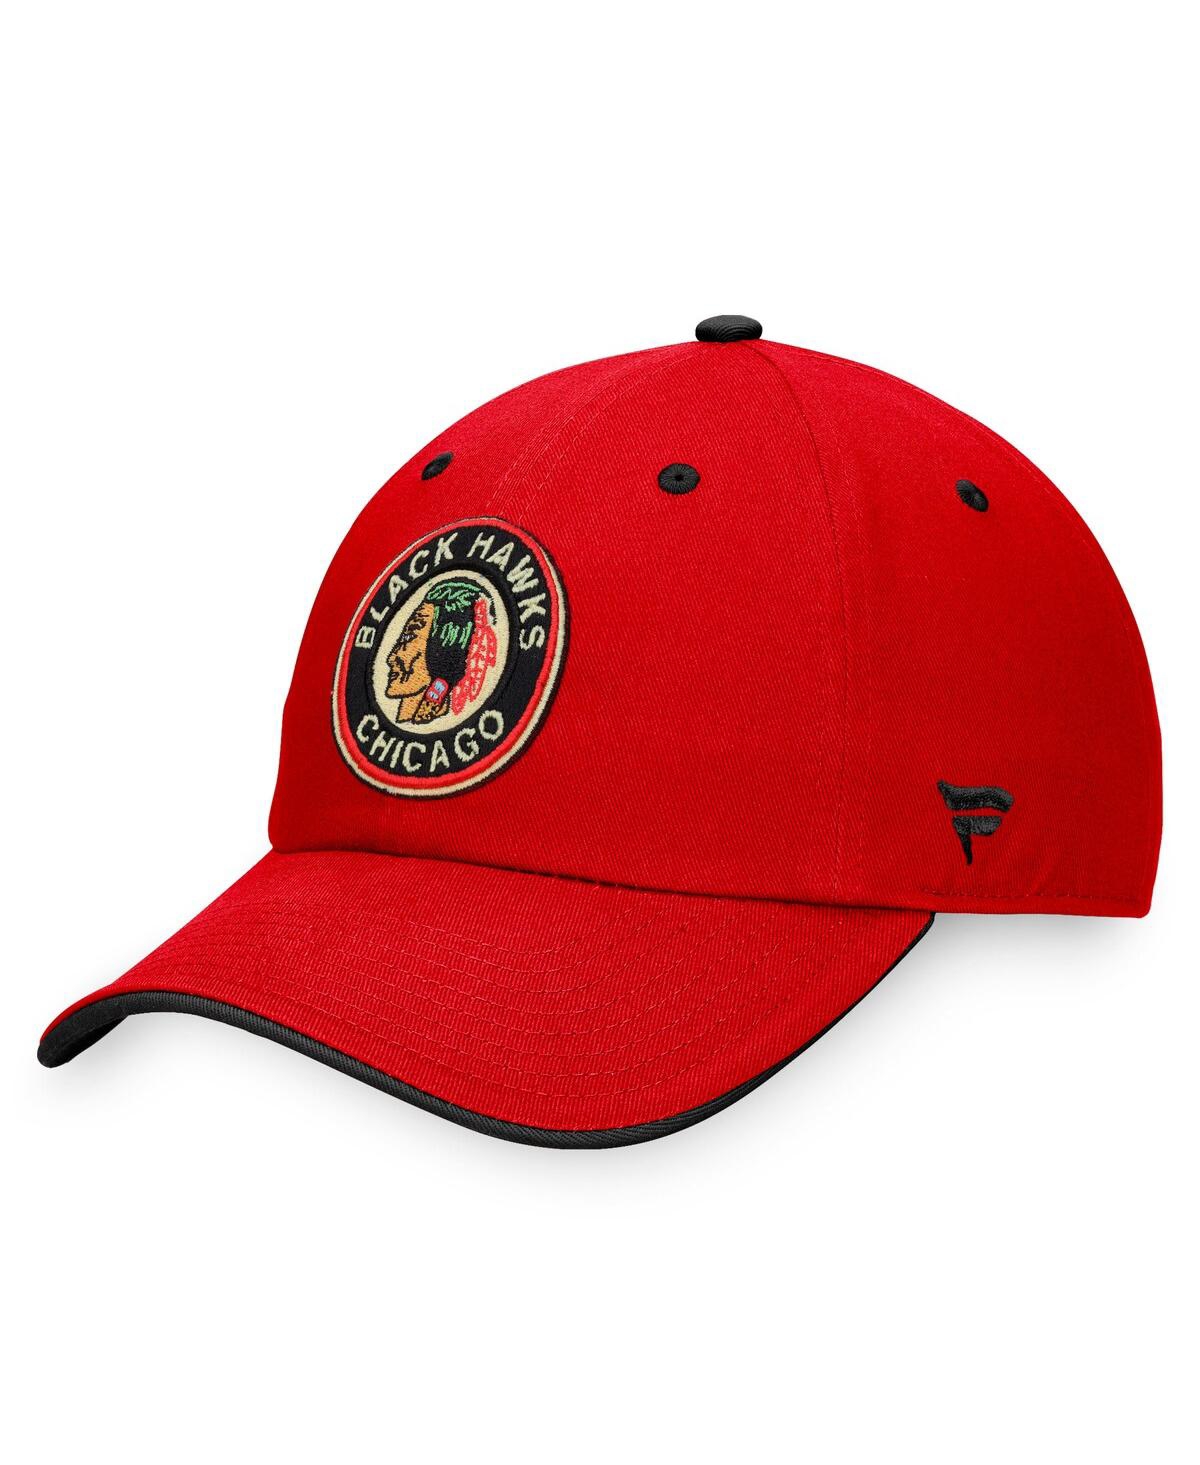 Fanatics Men's  Red Chicago Blackhawks Original Six Adjustable Hat